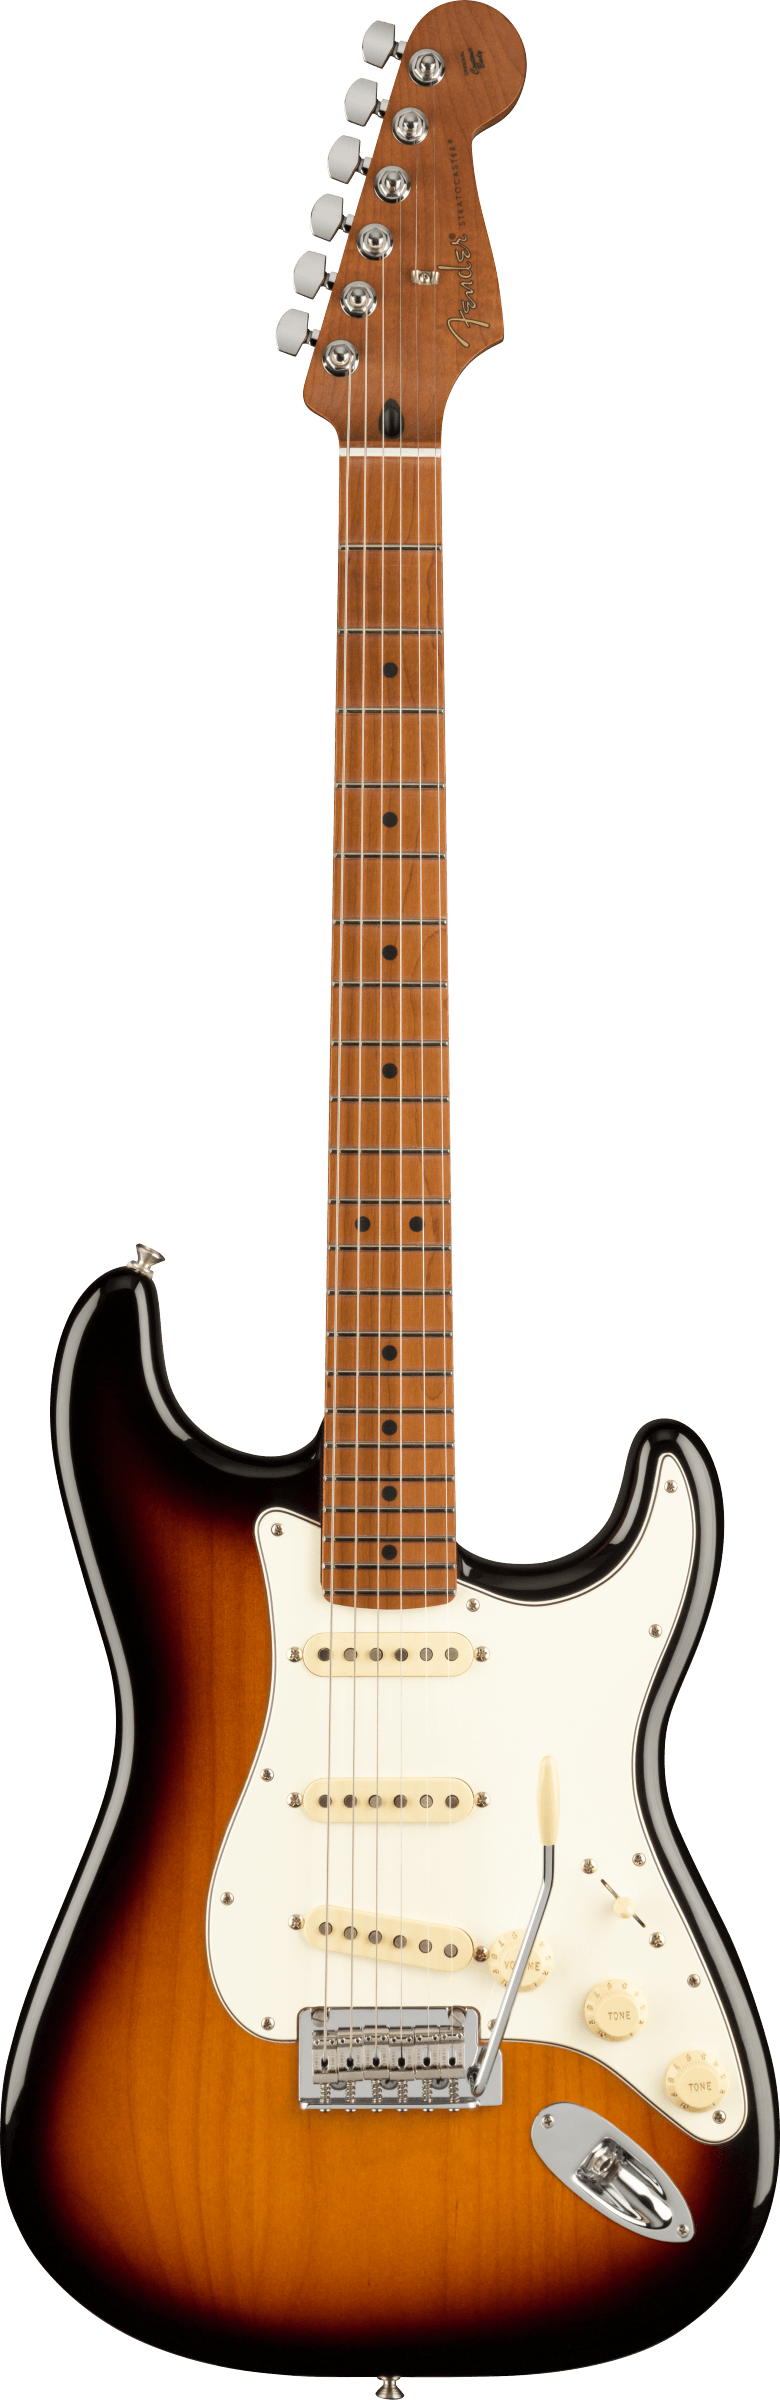 Limited Edition Player Stratocaster, Roasted Maple Neck 2-Color Sunburst